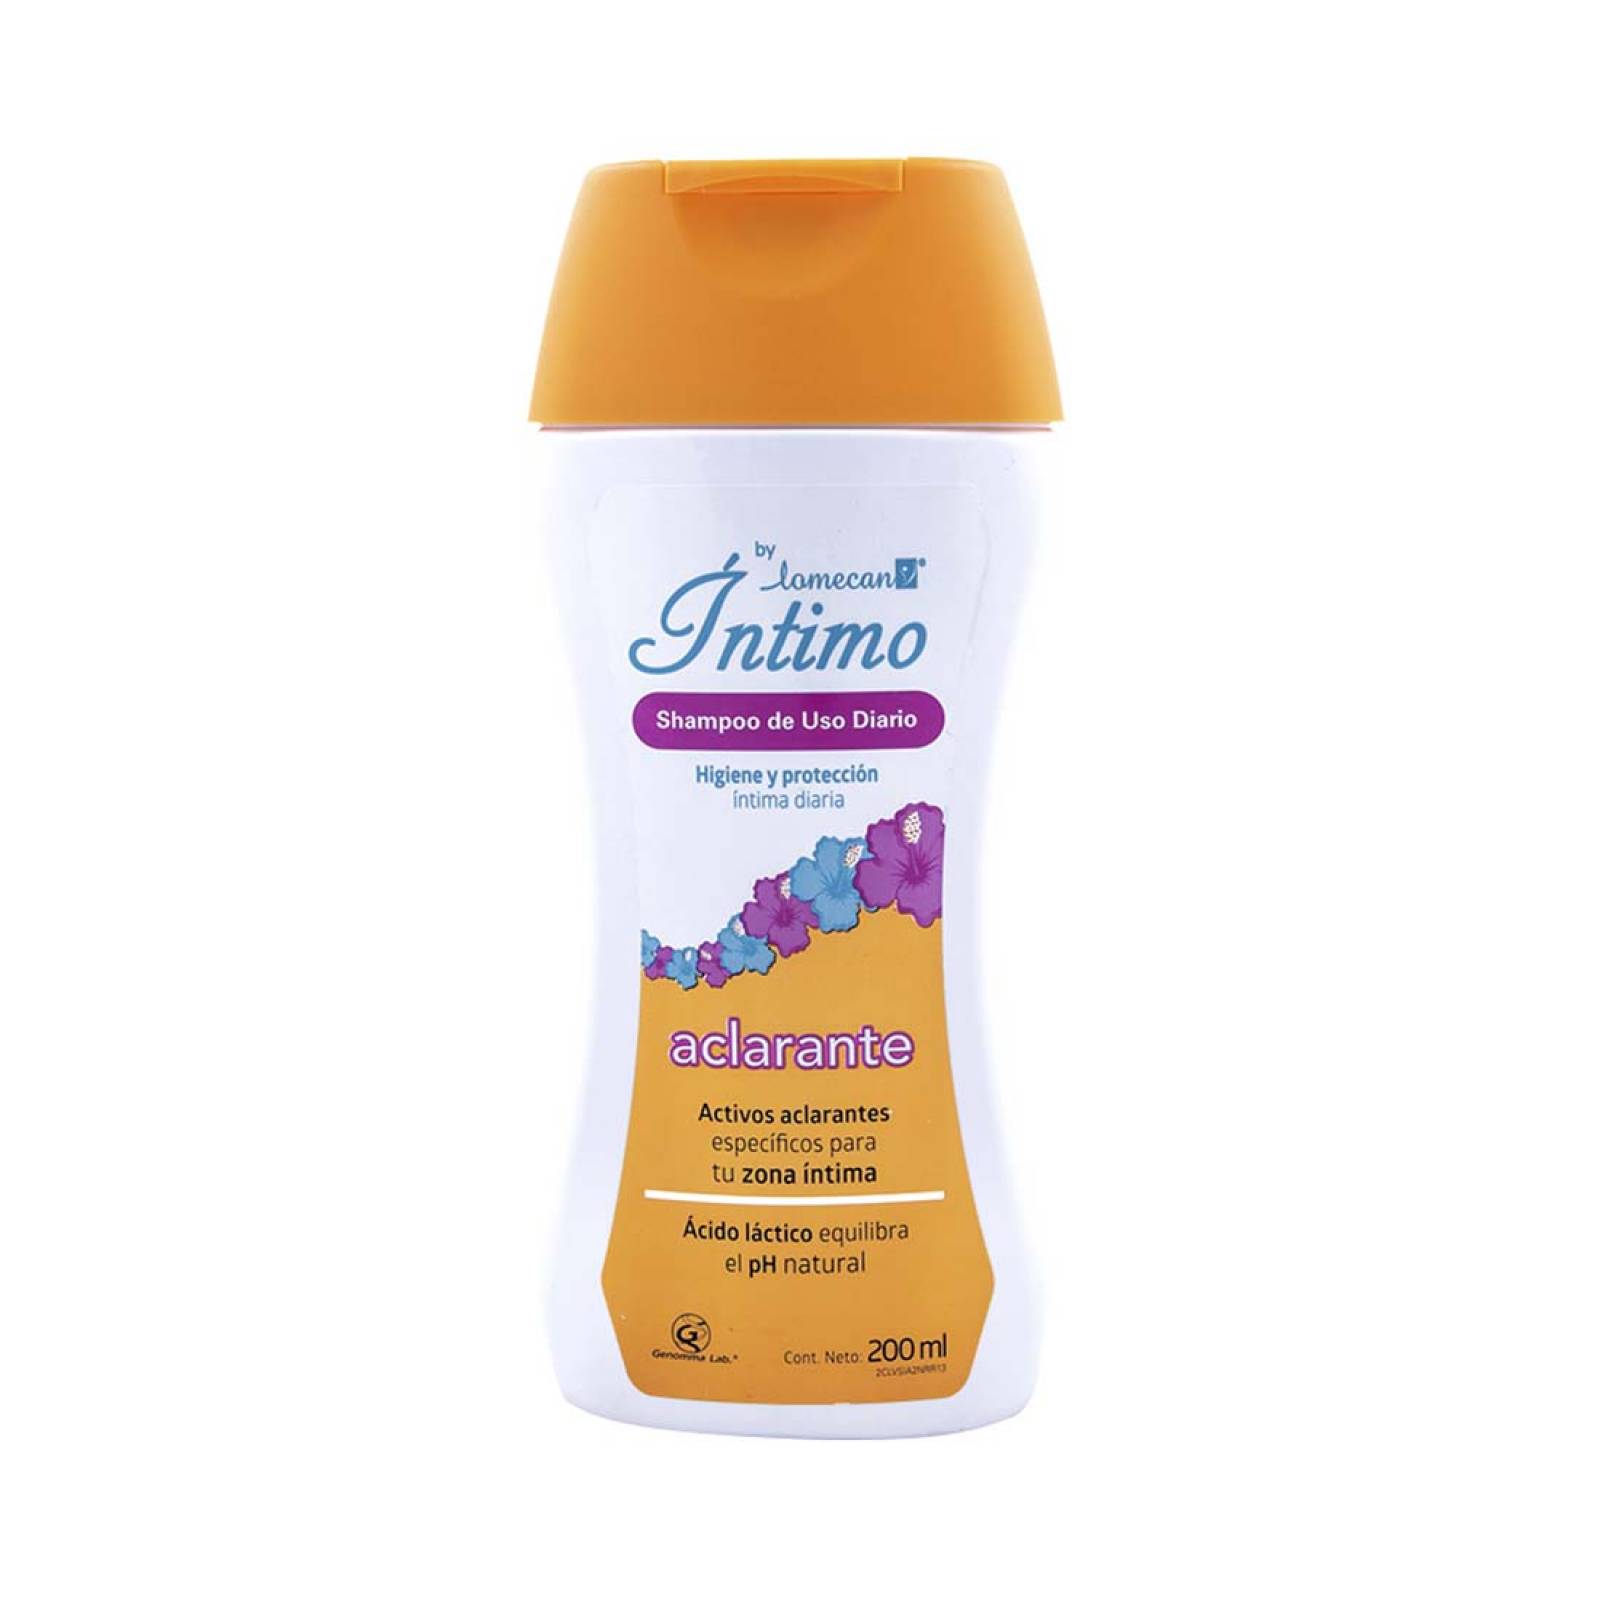 Shampoo Íntimo Lomecan V Aclarante 200ml Genomma Lab